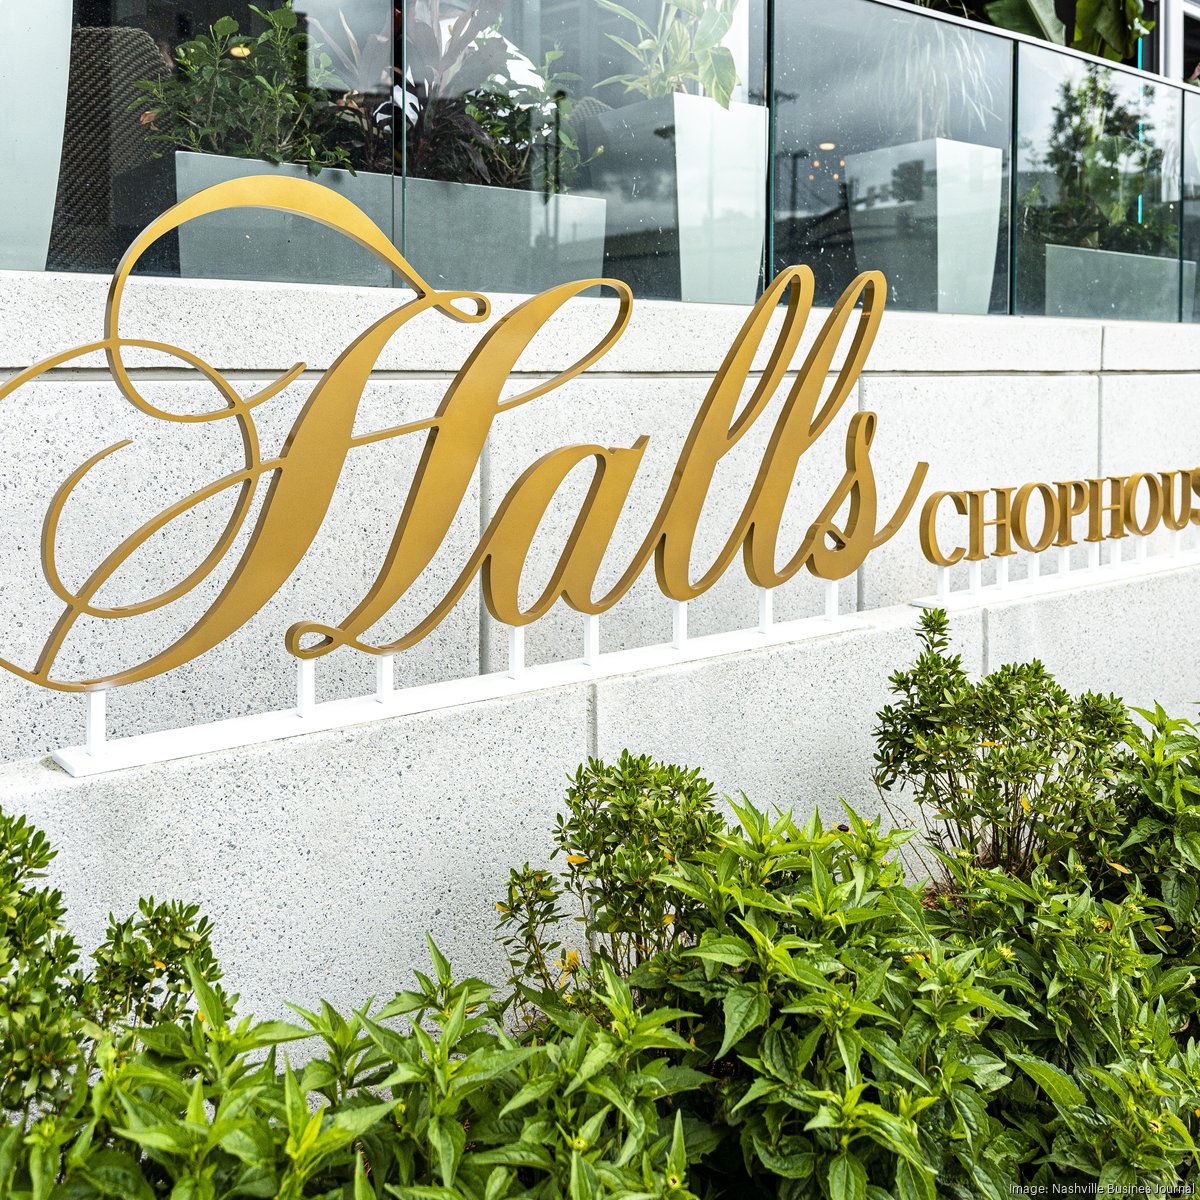 Halls Chophouse  Multi-location Steakhouse